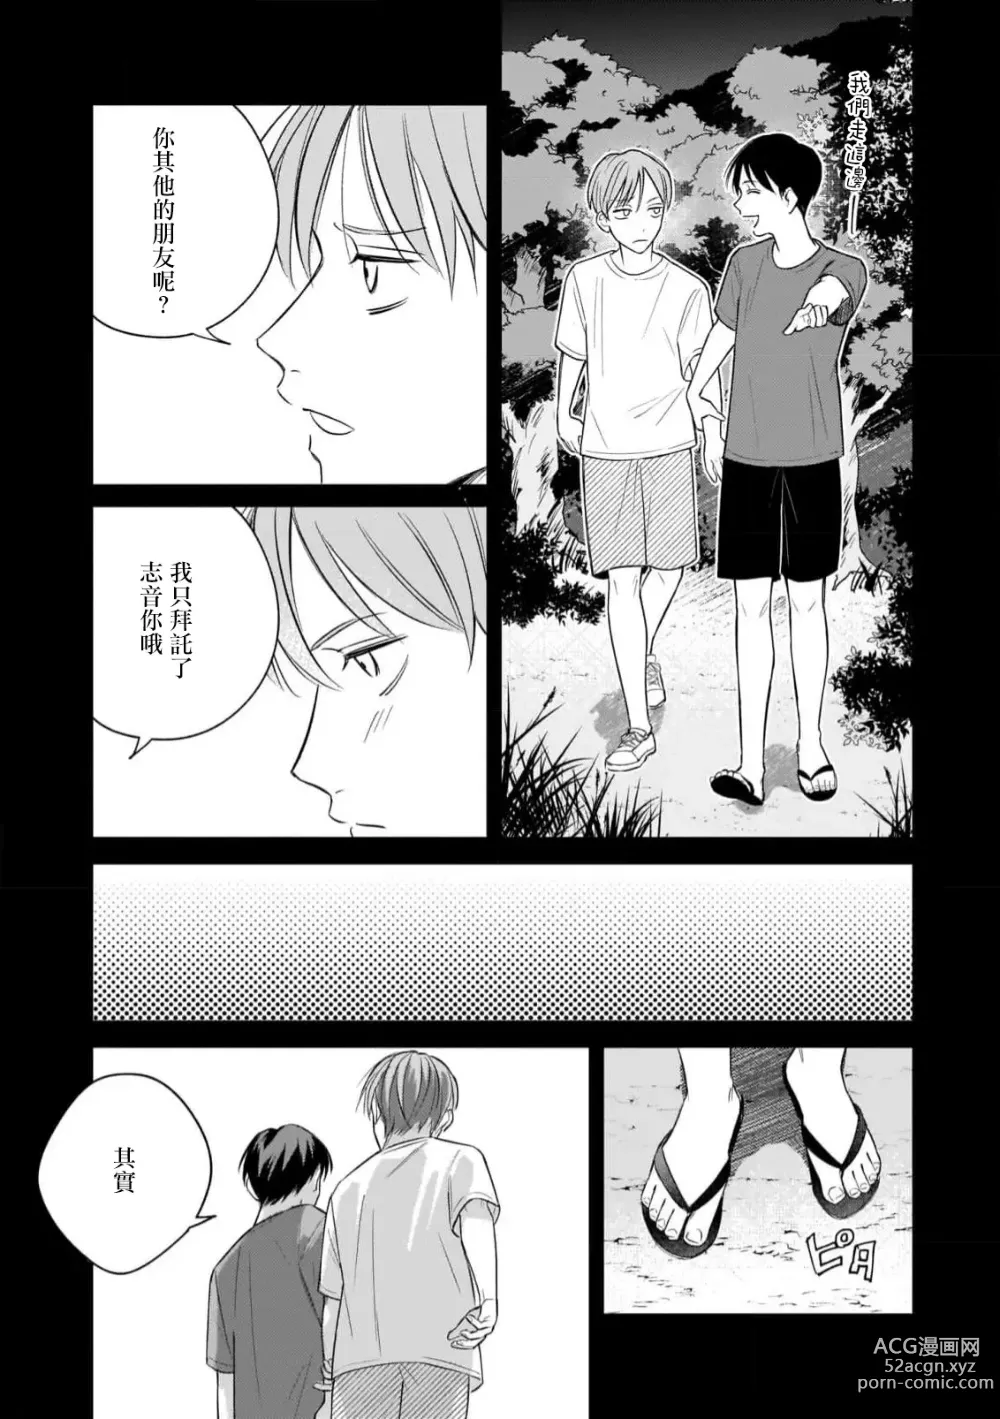 Page 6 of manga 无敌的baby blue #03